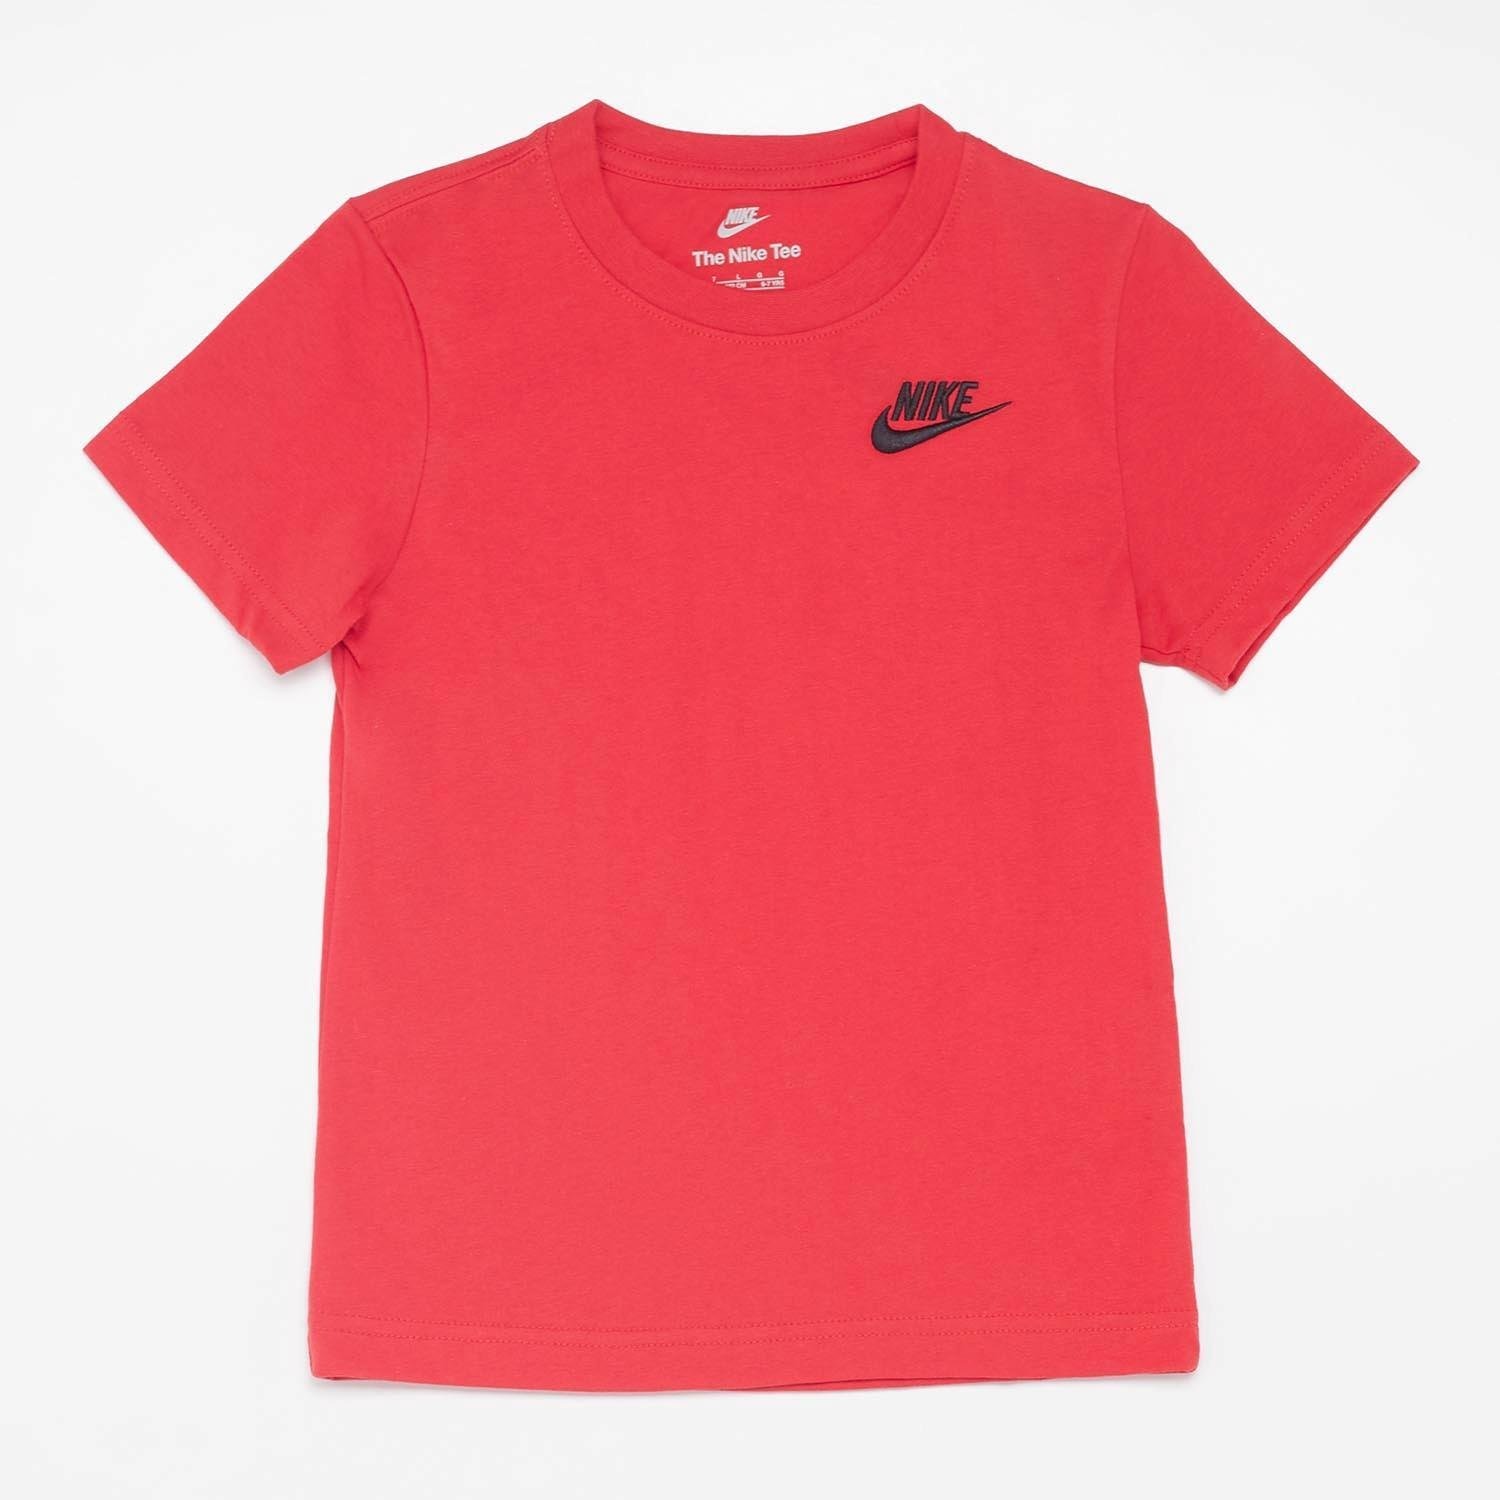 Nike Nike shirt rood kinderen kinderen